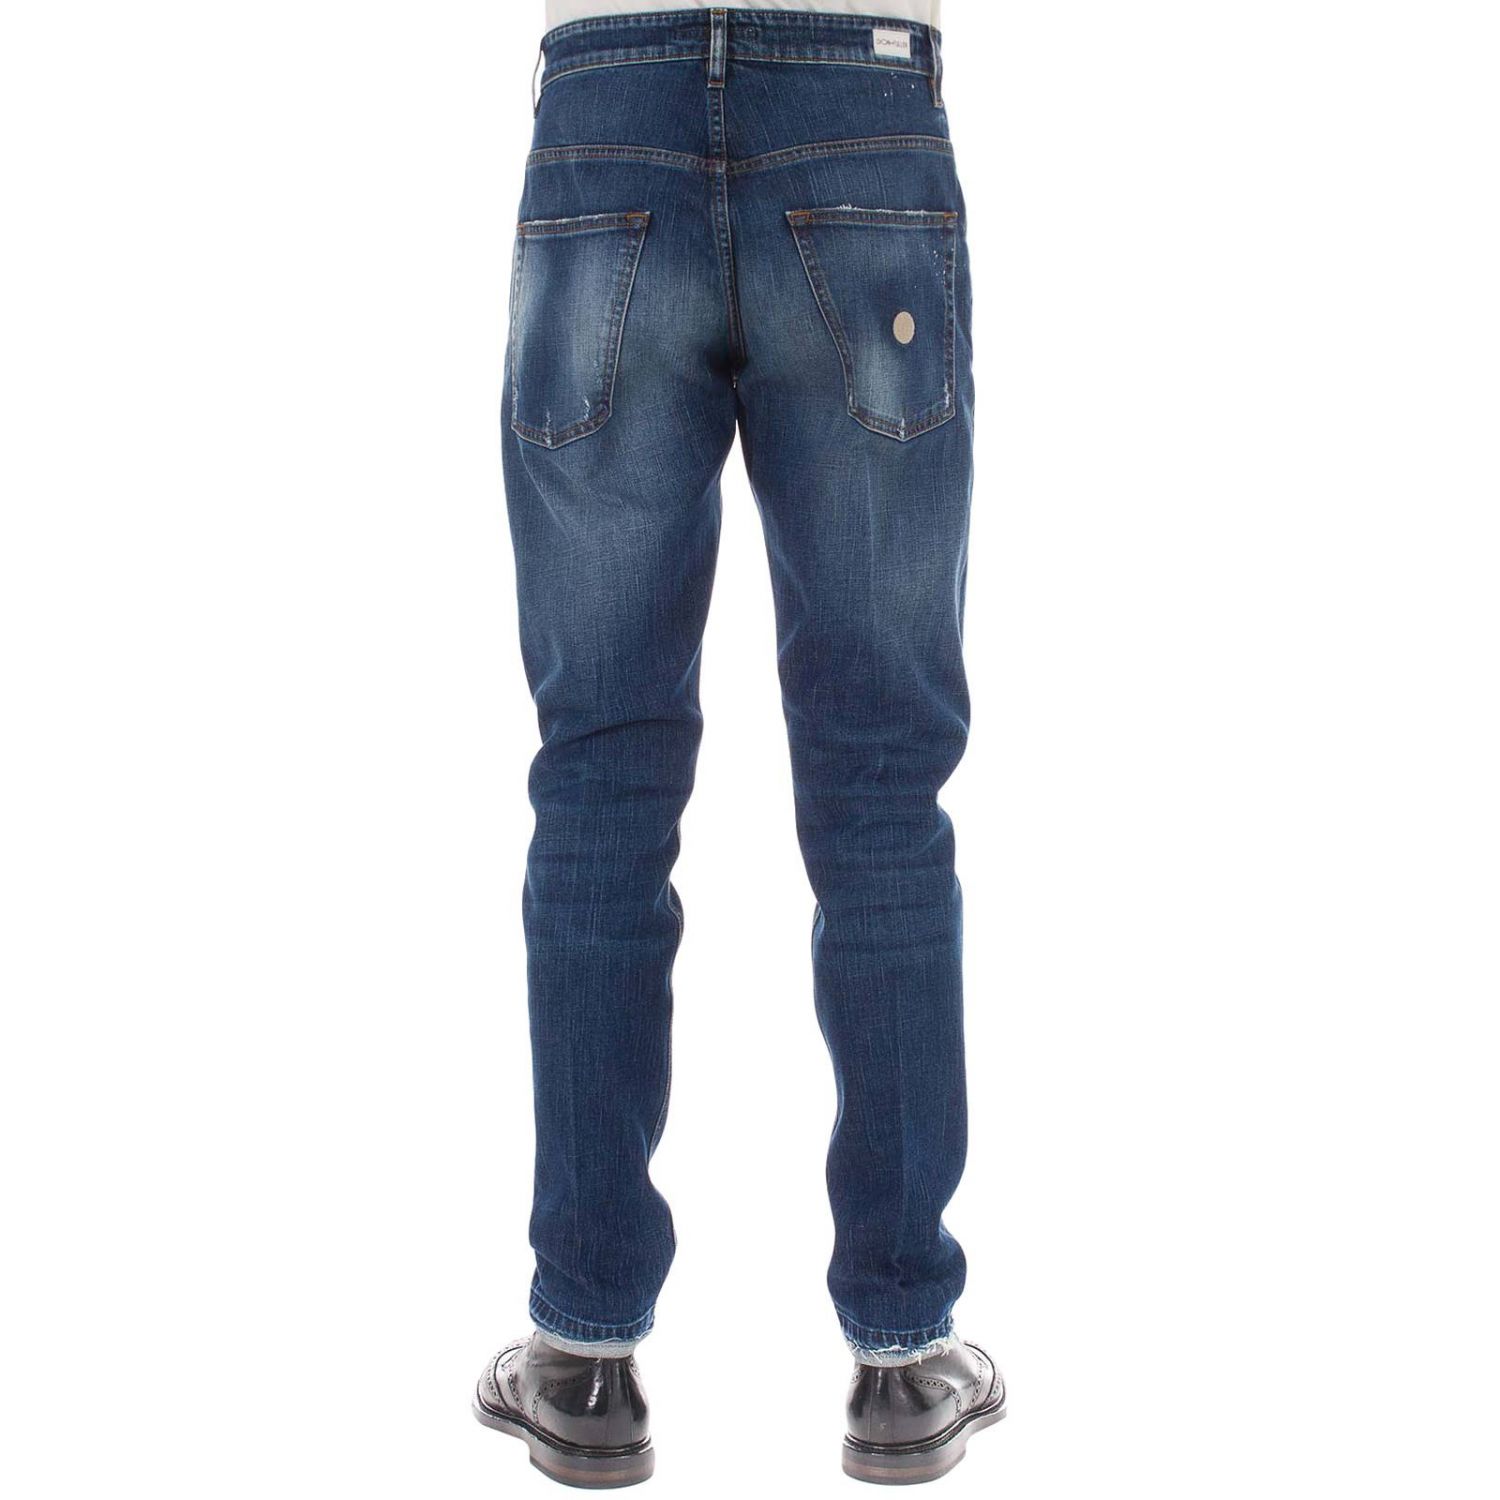 Don The Fuller Outlet: jeans for man - Blue | Don The Fuller jeans ...